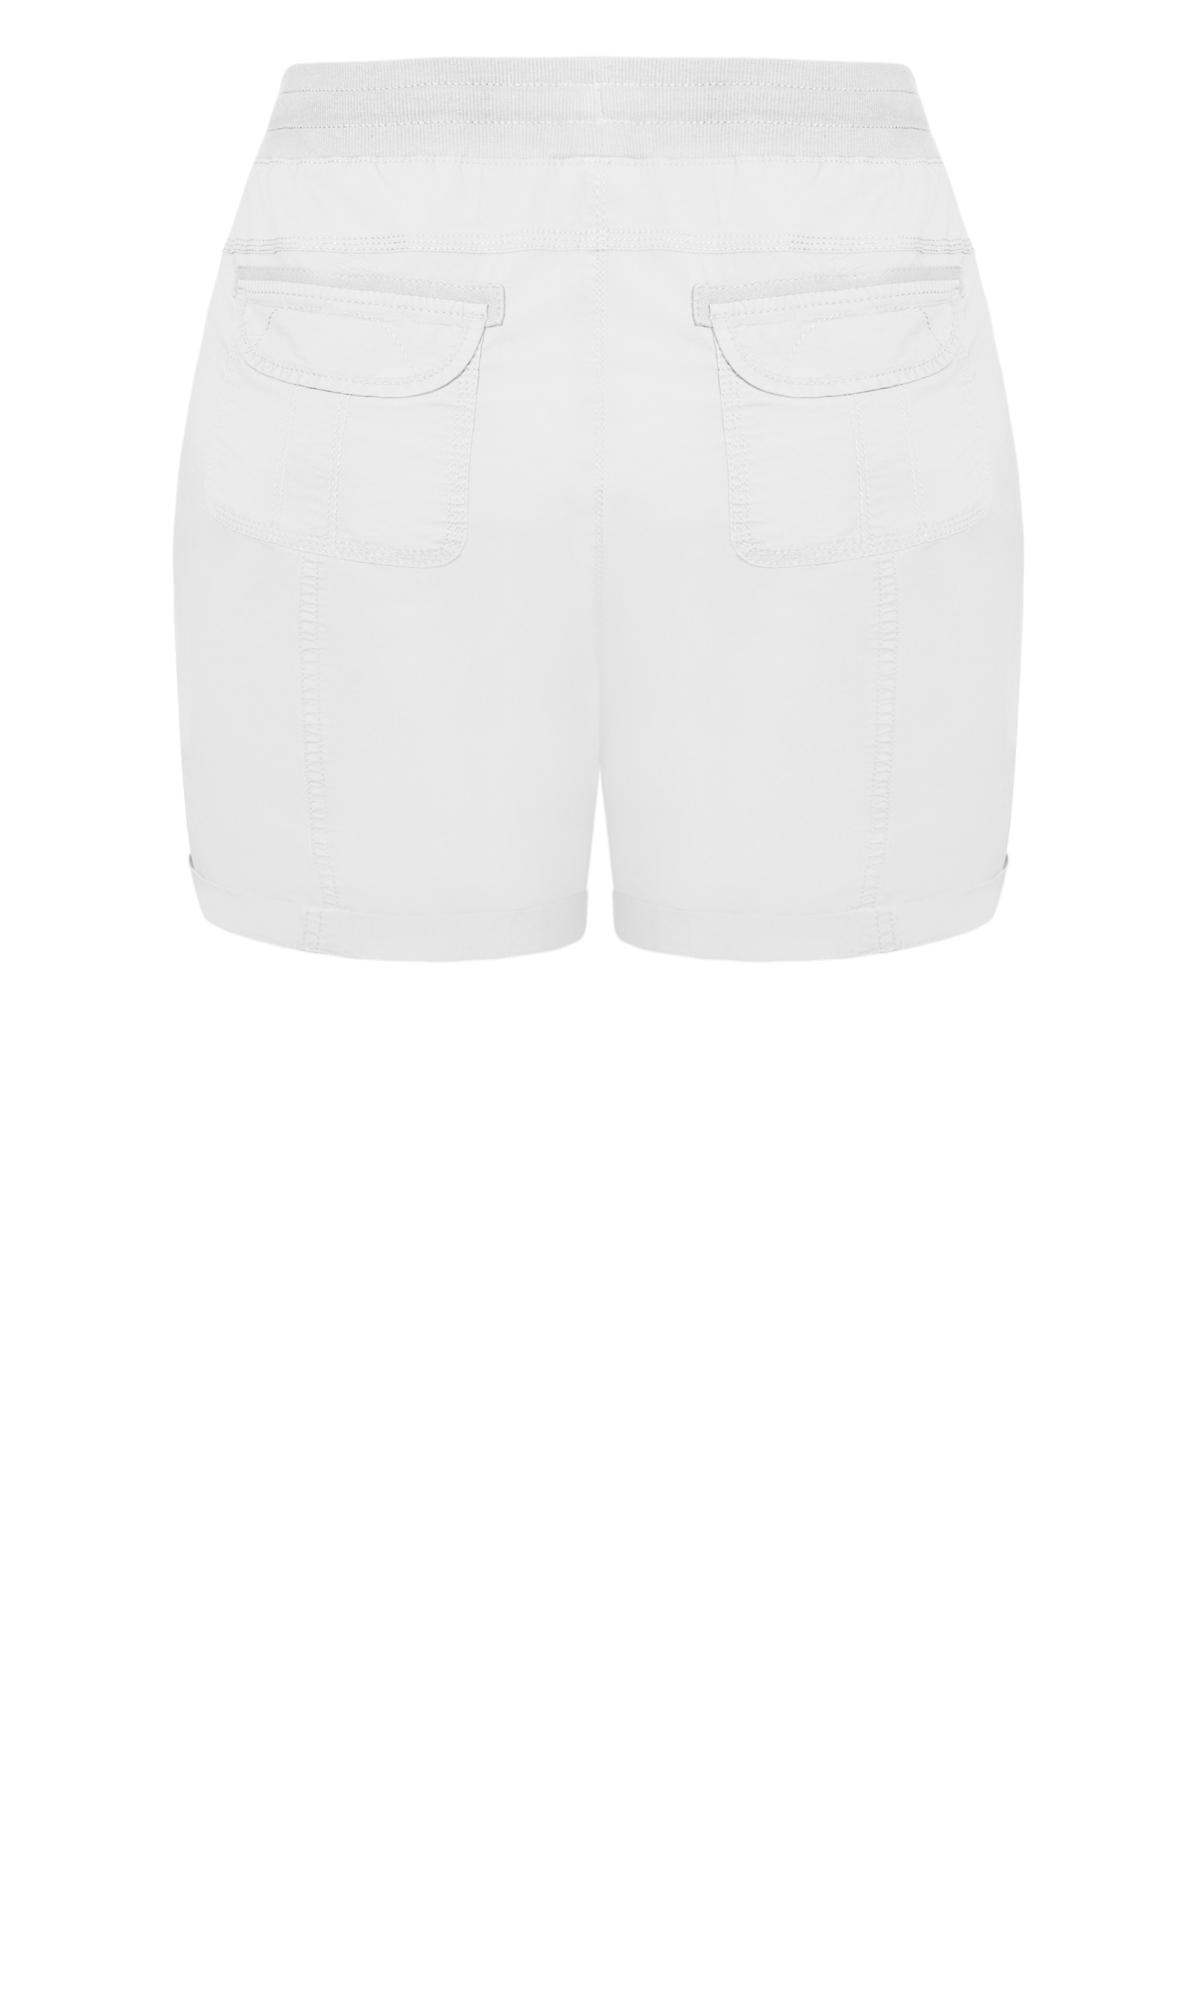 Cotton Casual White Short 3